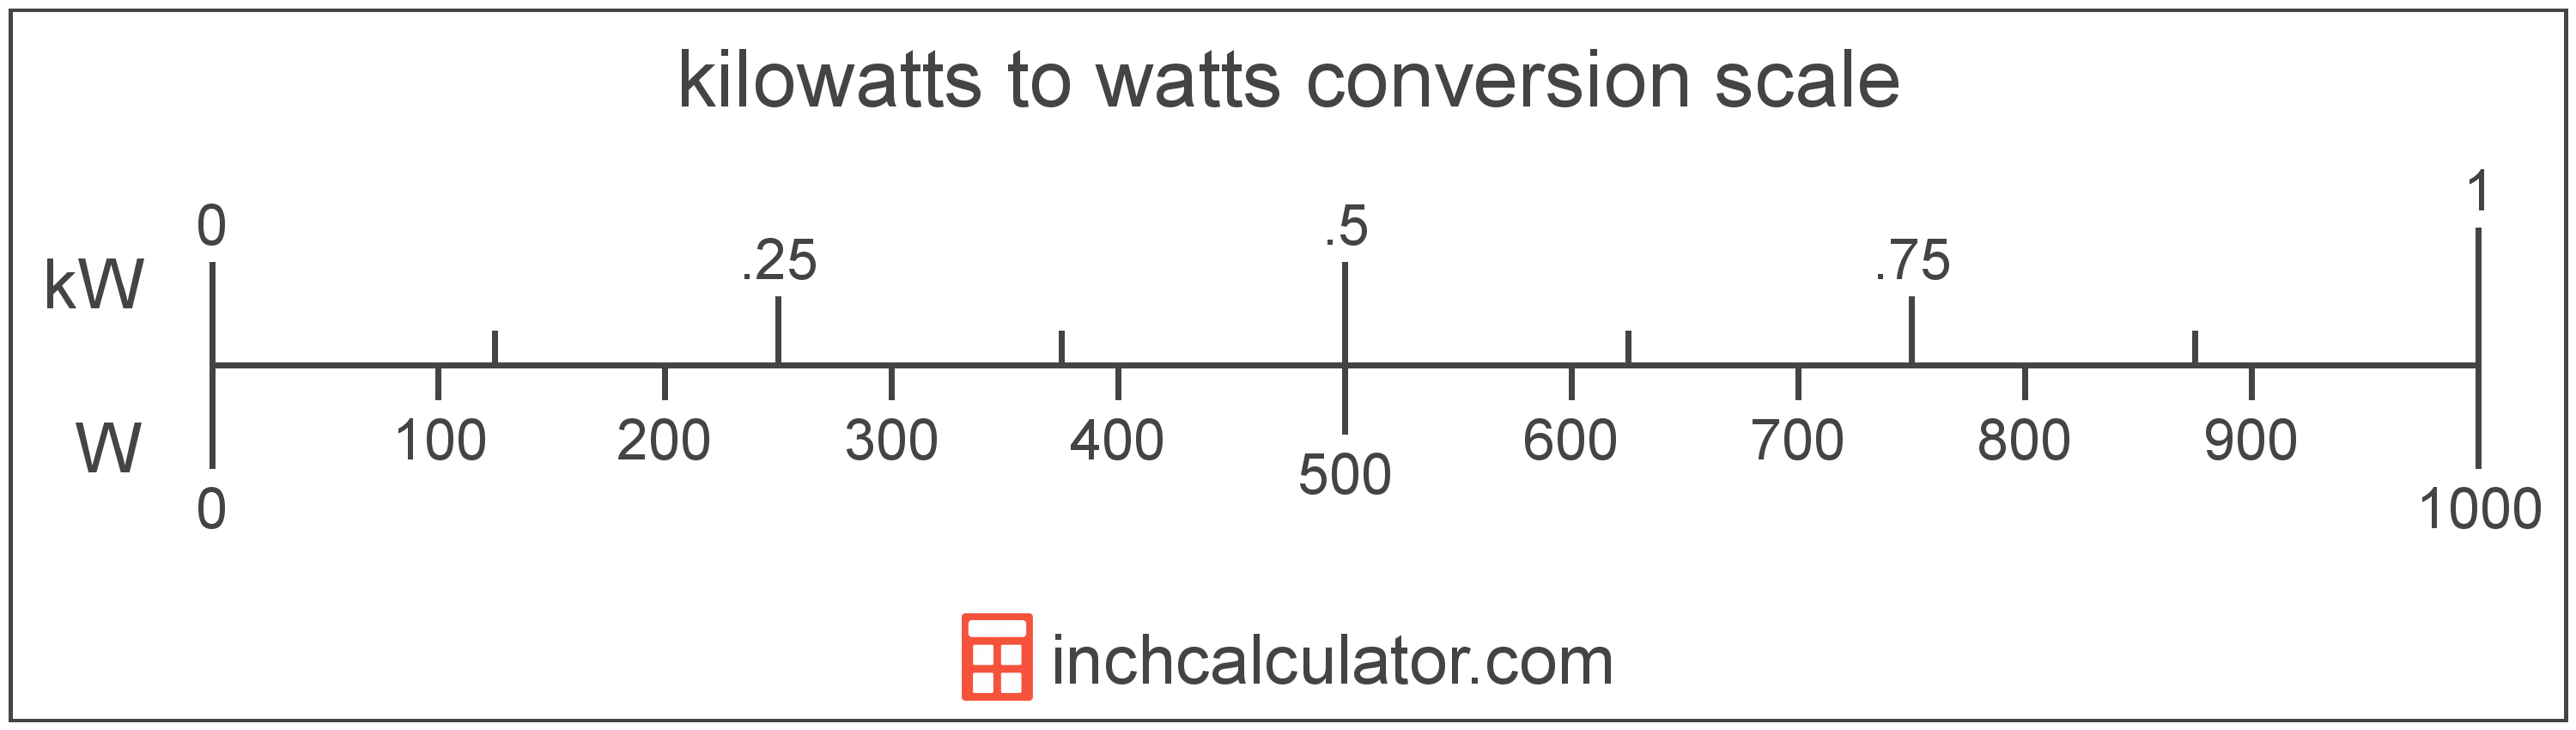 watt to kilowatt conversion chart - Part.tscoreks.org